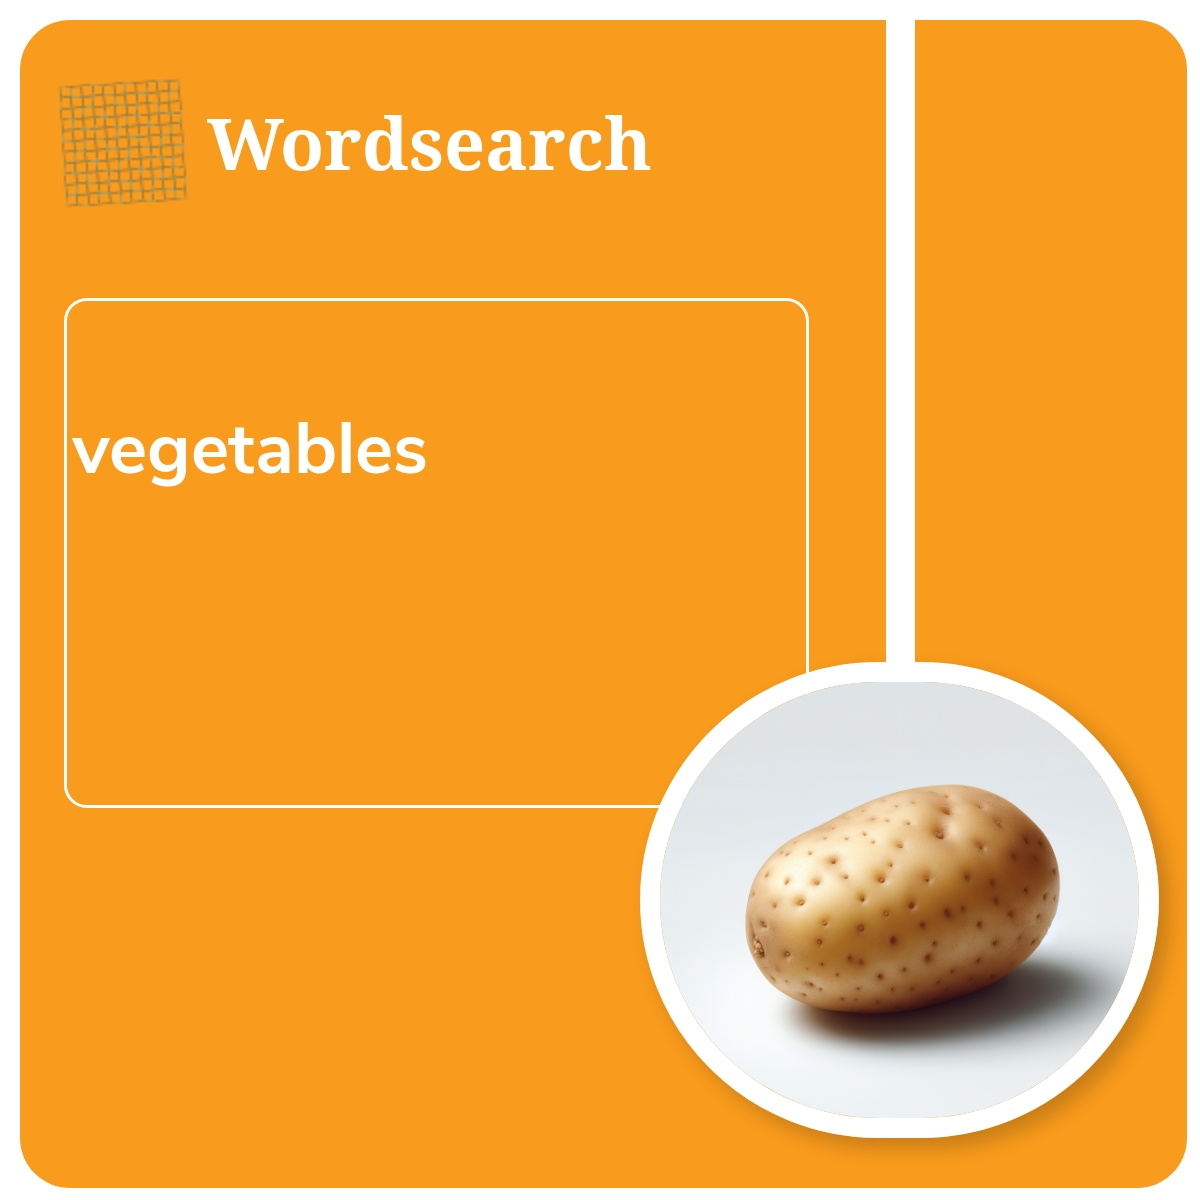 Wordsearch: vegetables